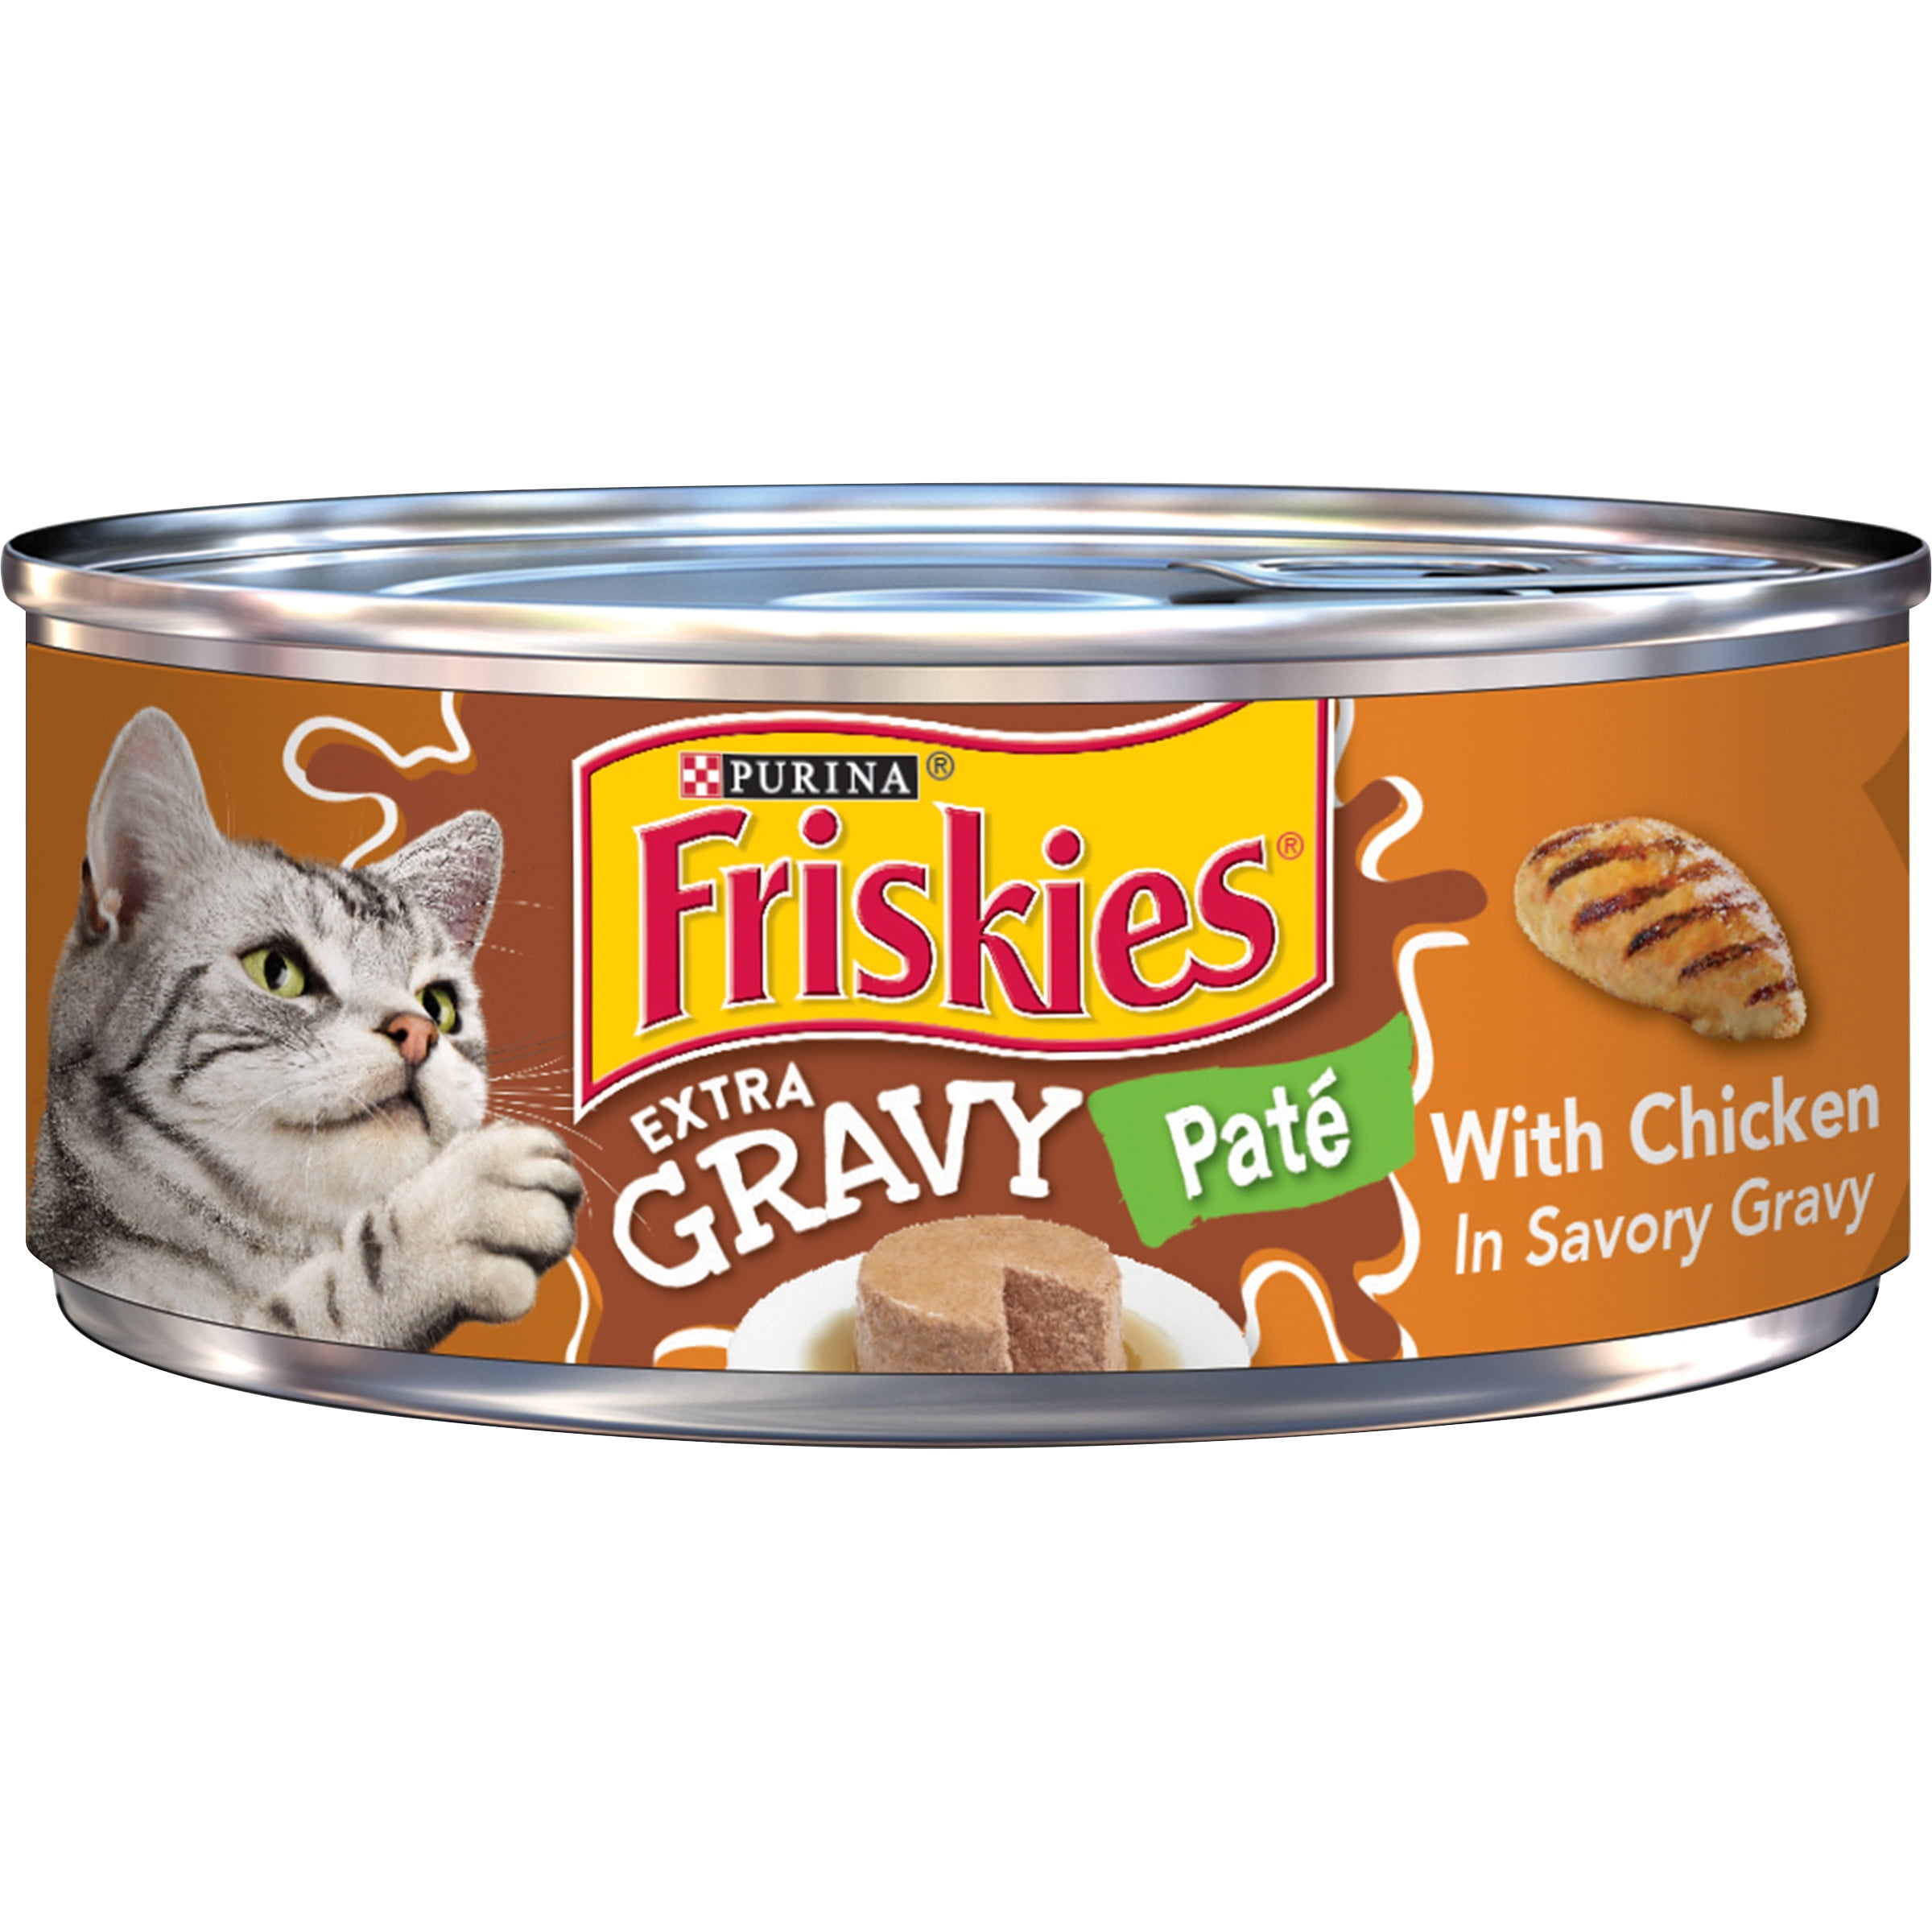 Friskies Gravy Pate Wet Cat Food, Extra Gravy Pate With Chicken in